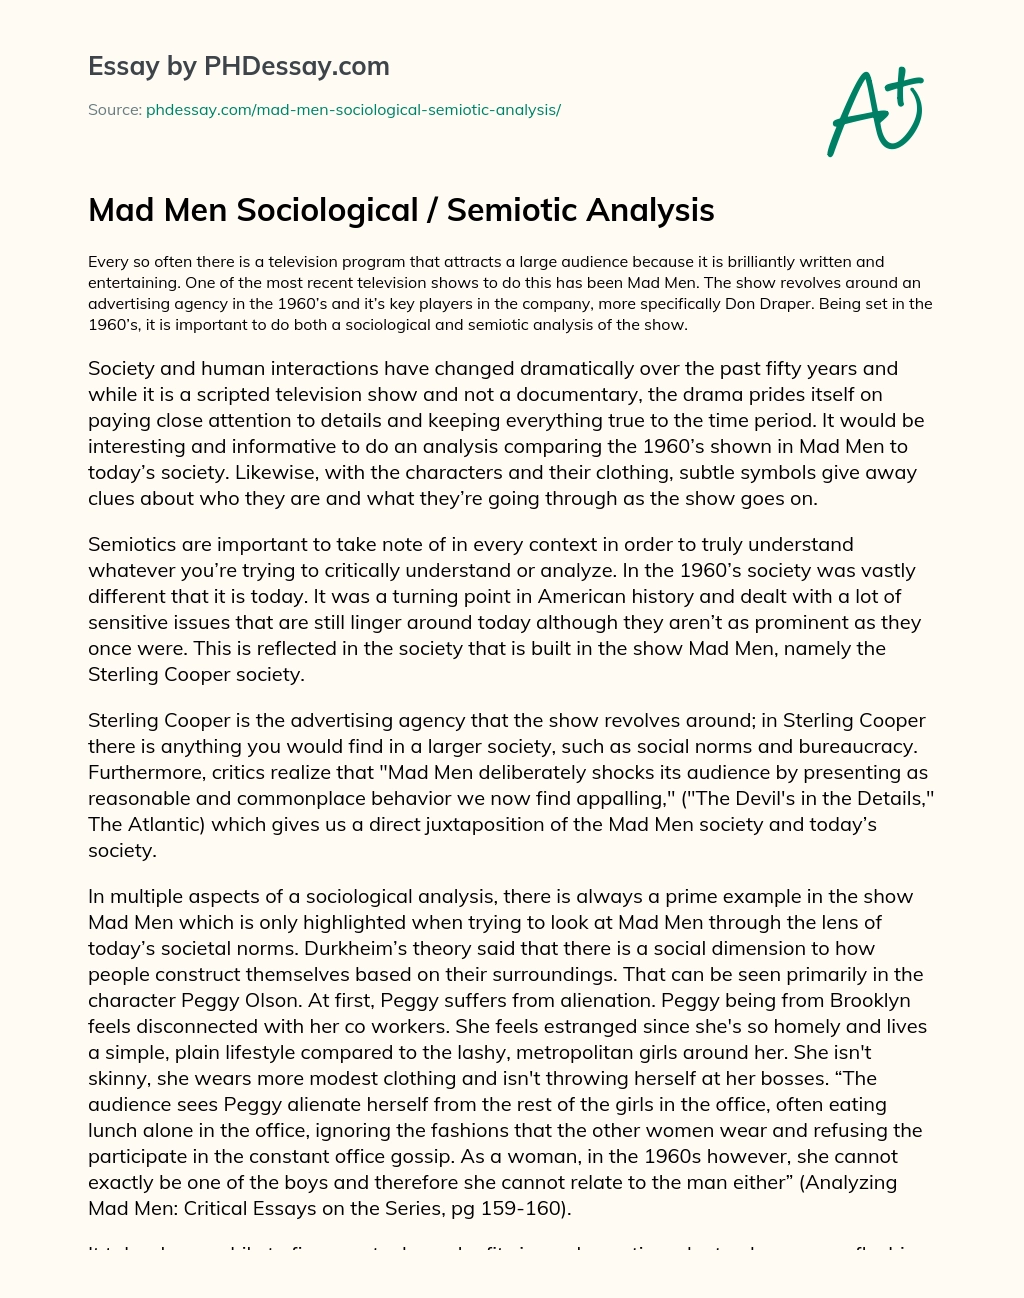 Mad Men Sociological / Semiotic Analysis essay